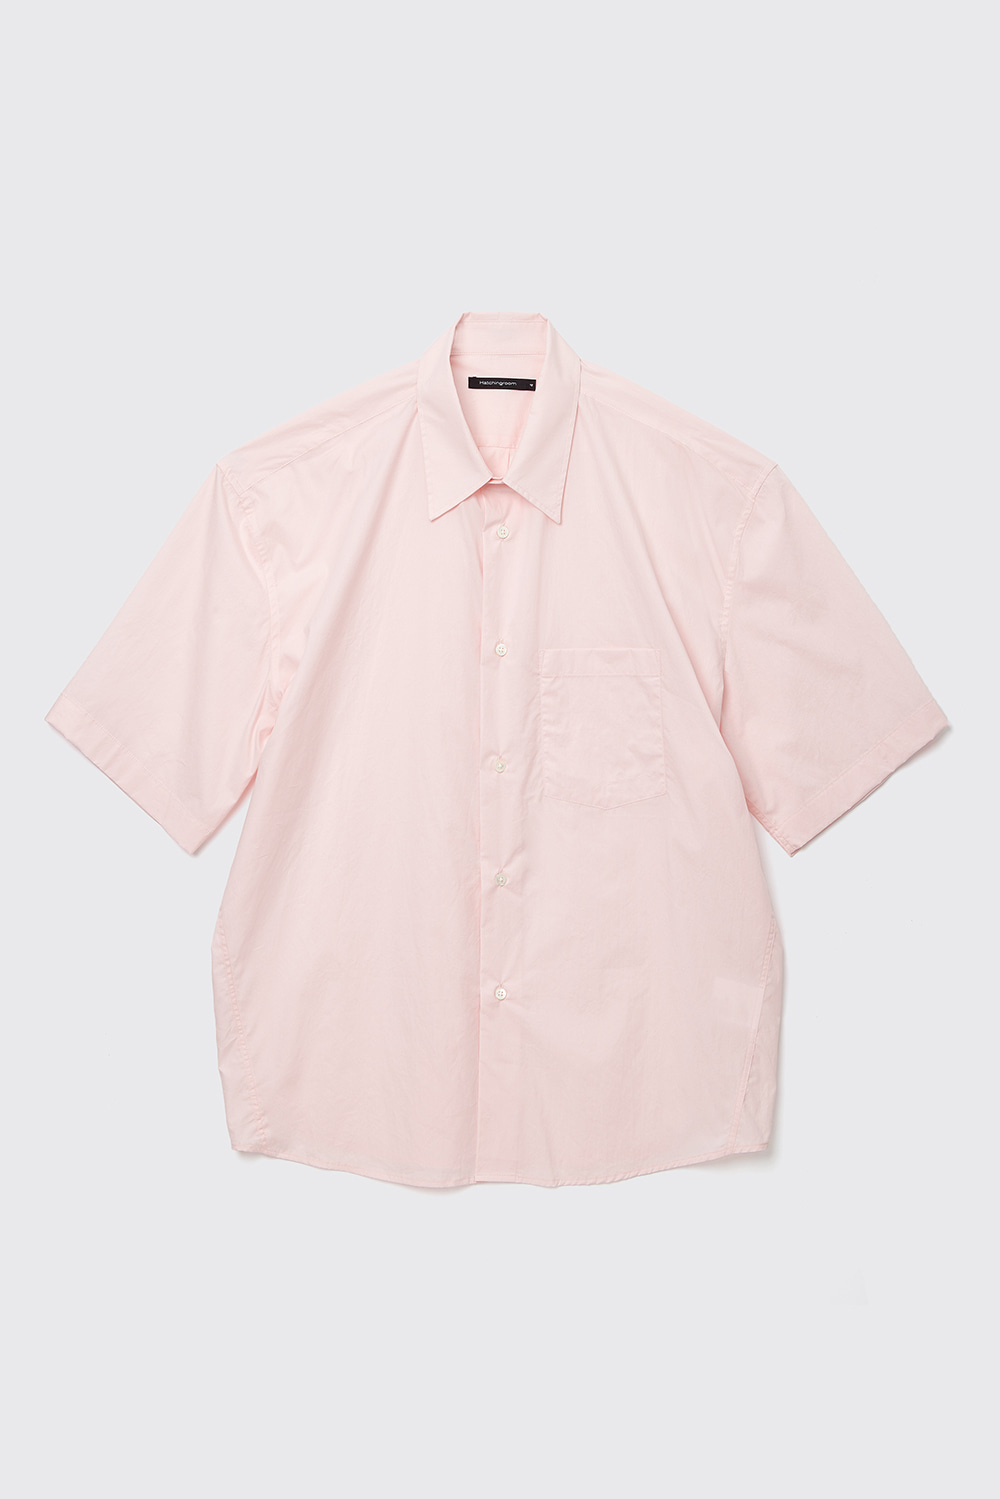 [soui. Exclusive] Half Shirt Light Pink